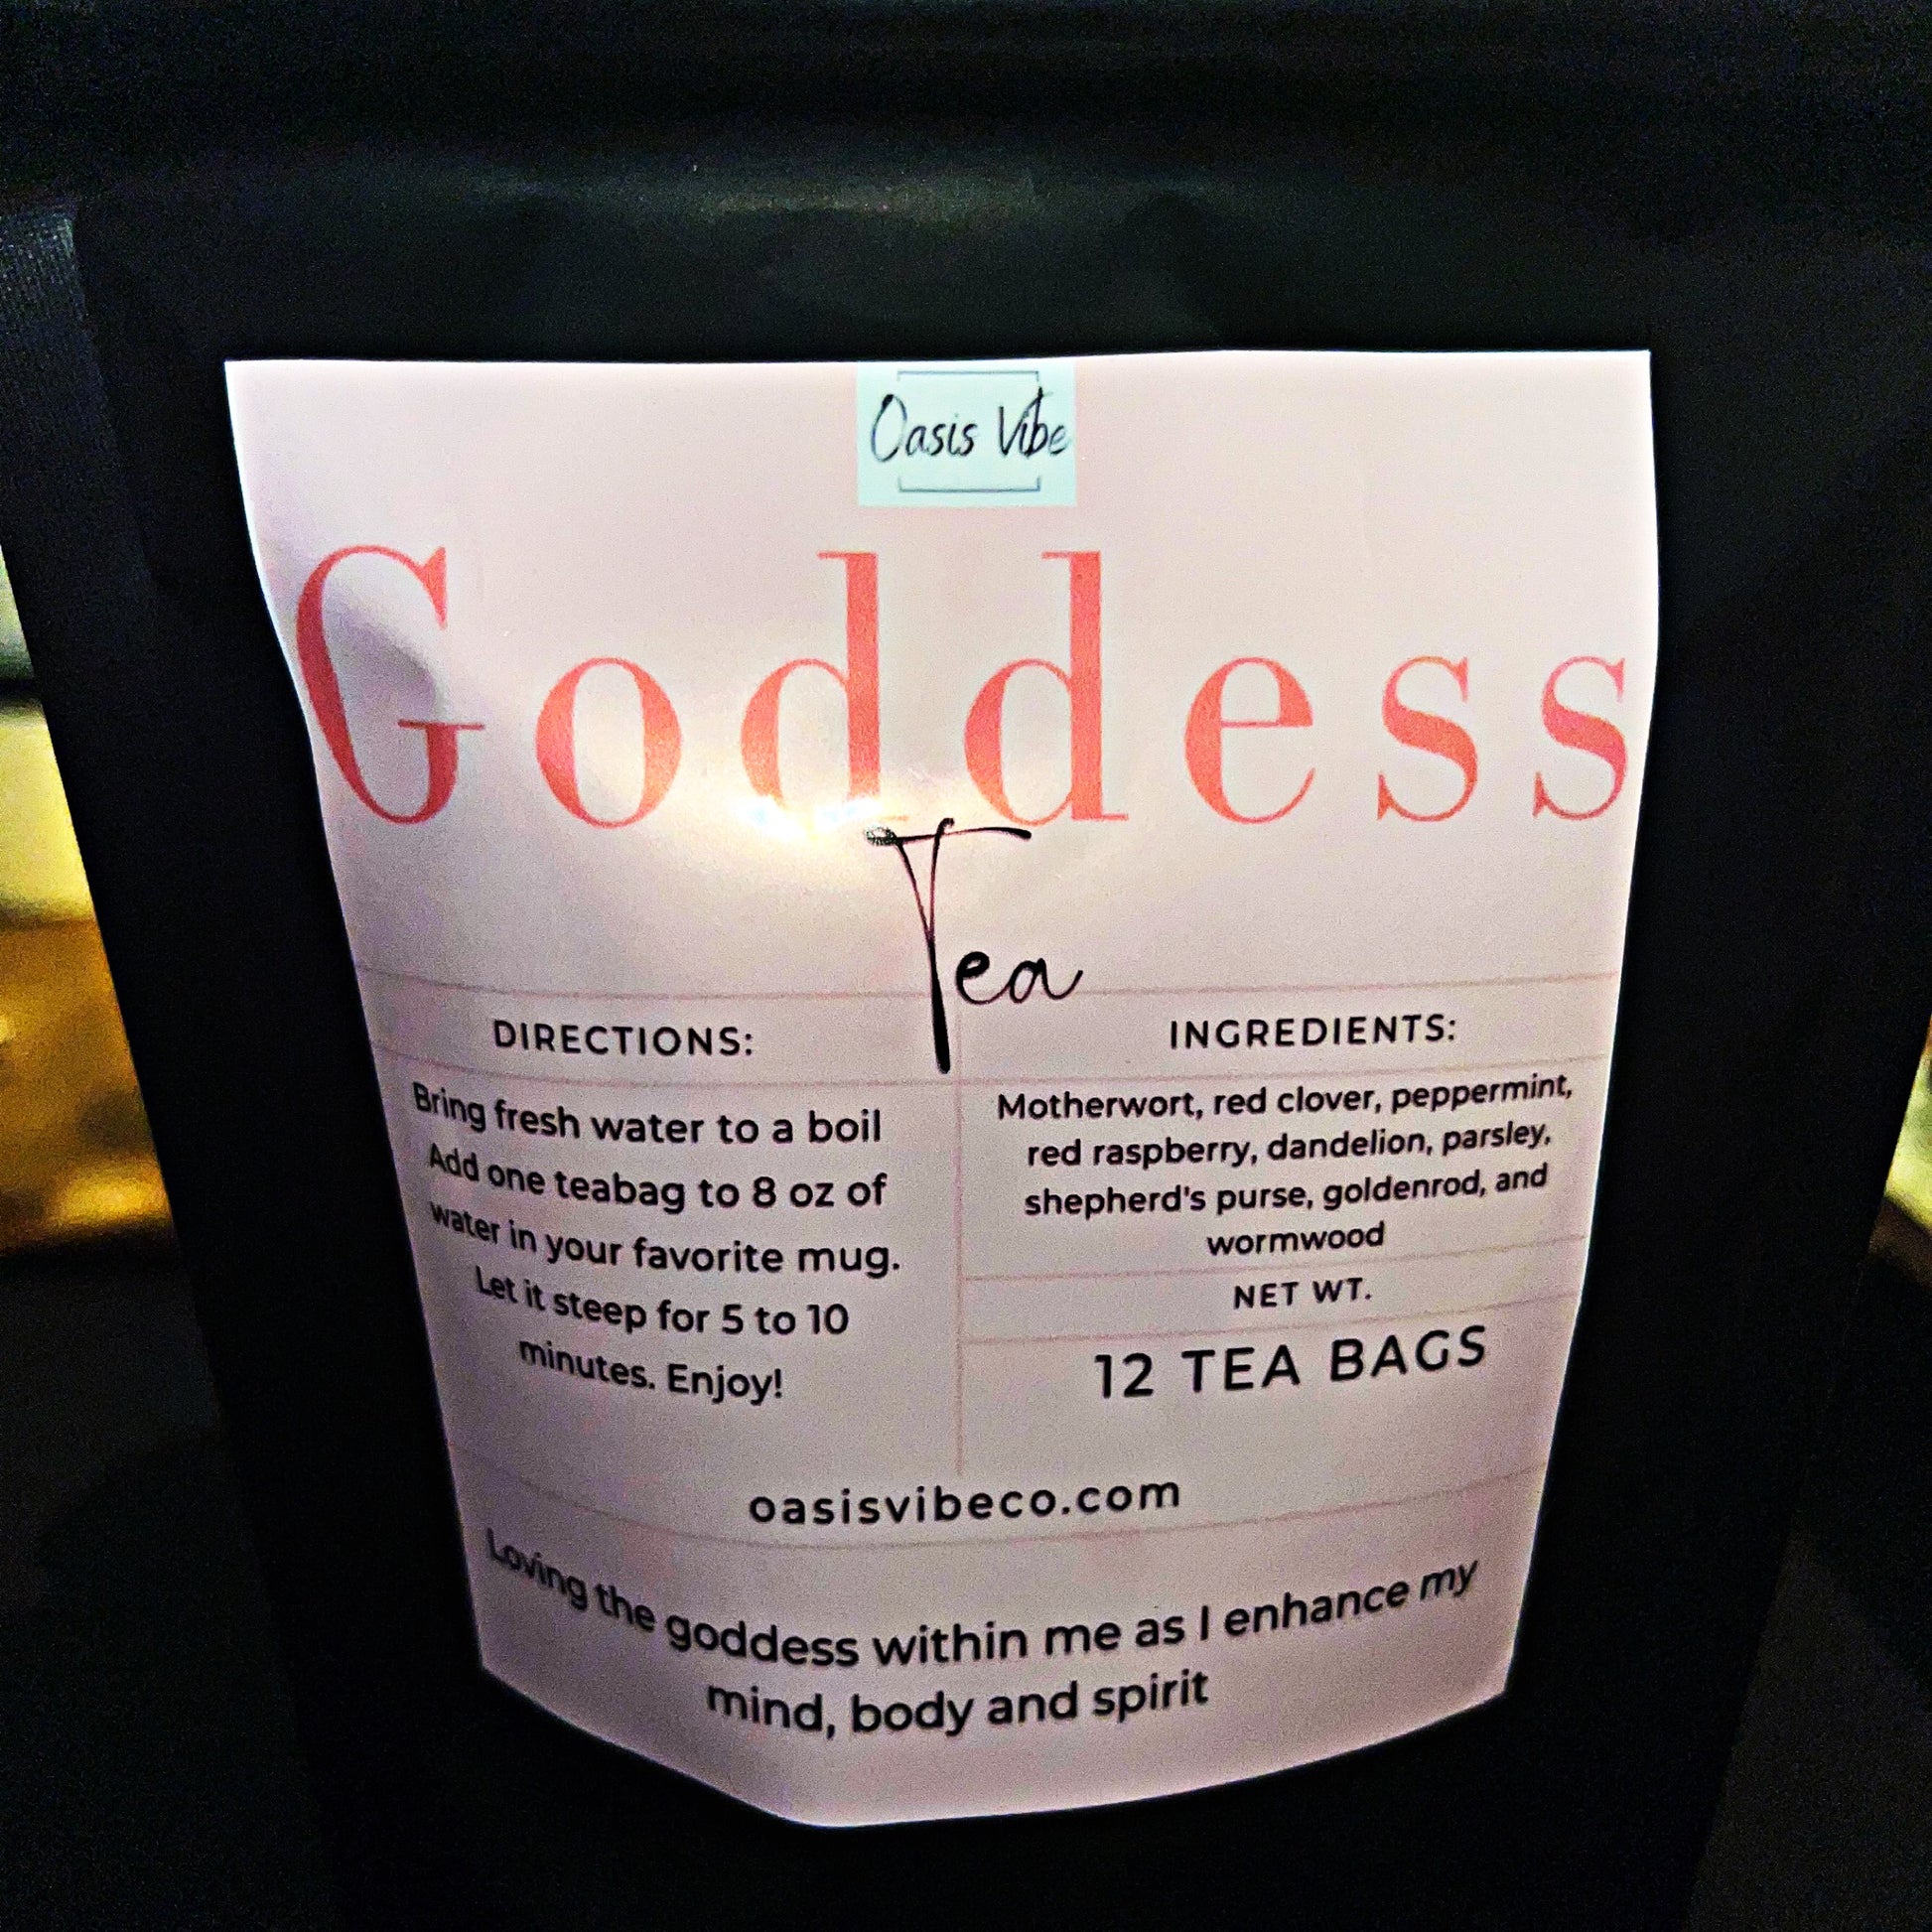 Goddess Tea